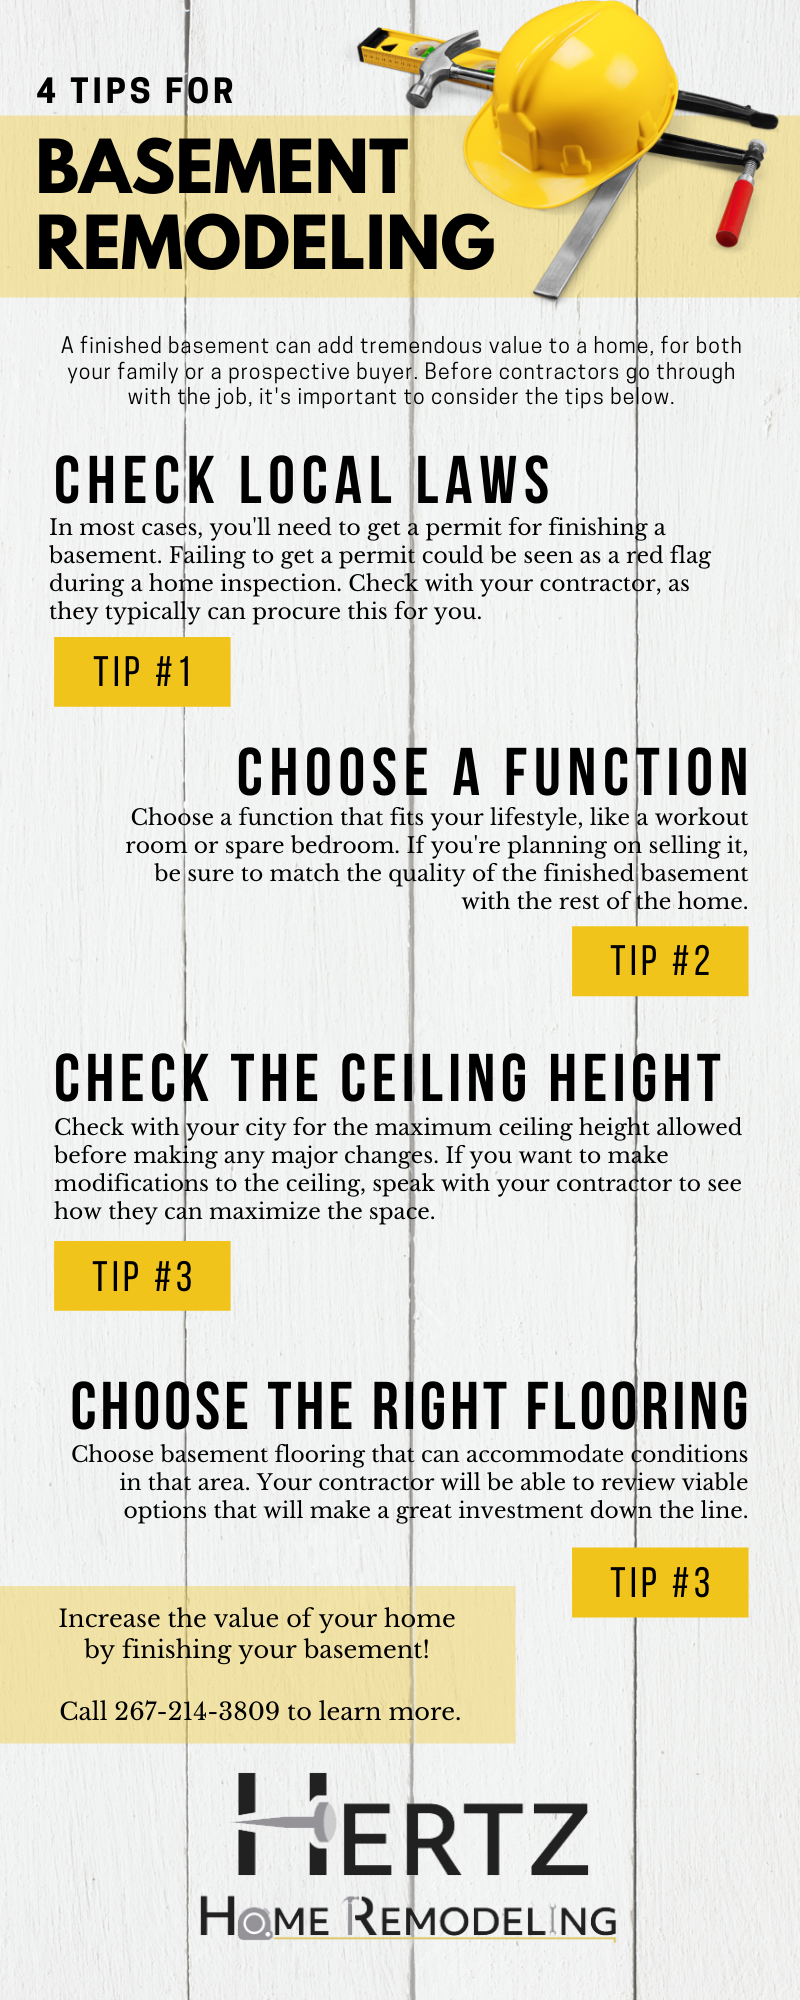 Infographic providing 4 tips for basement remodeling or finishing basements